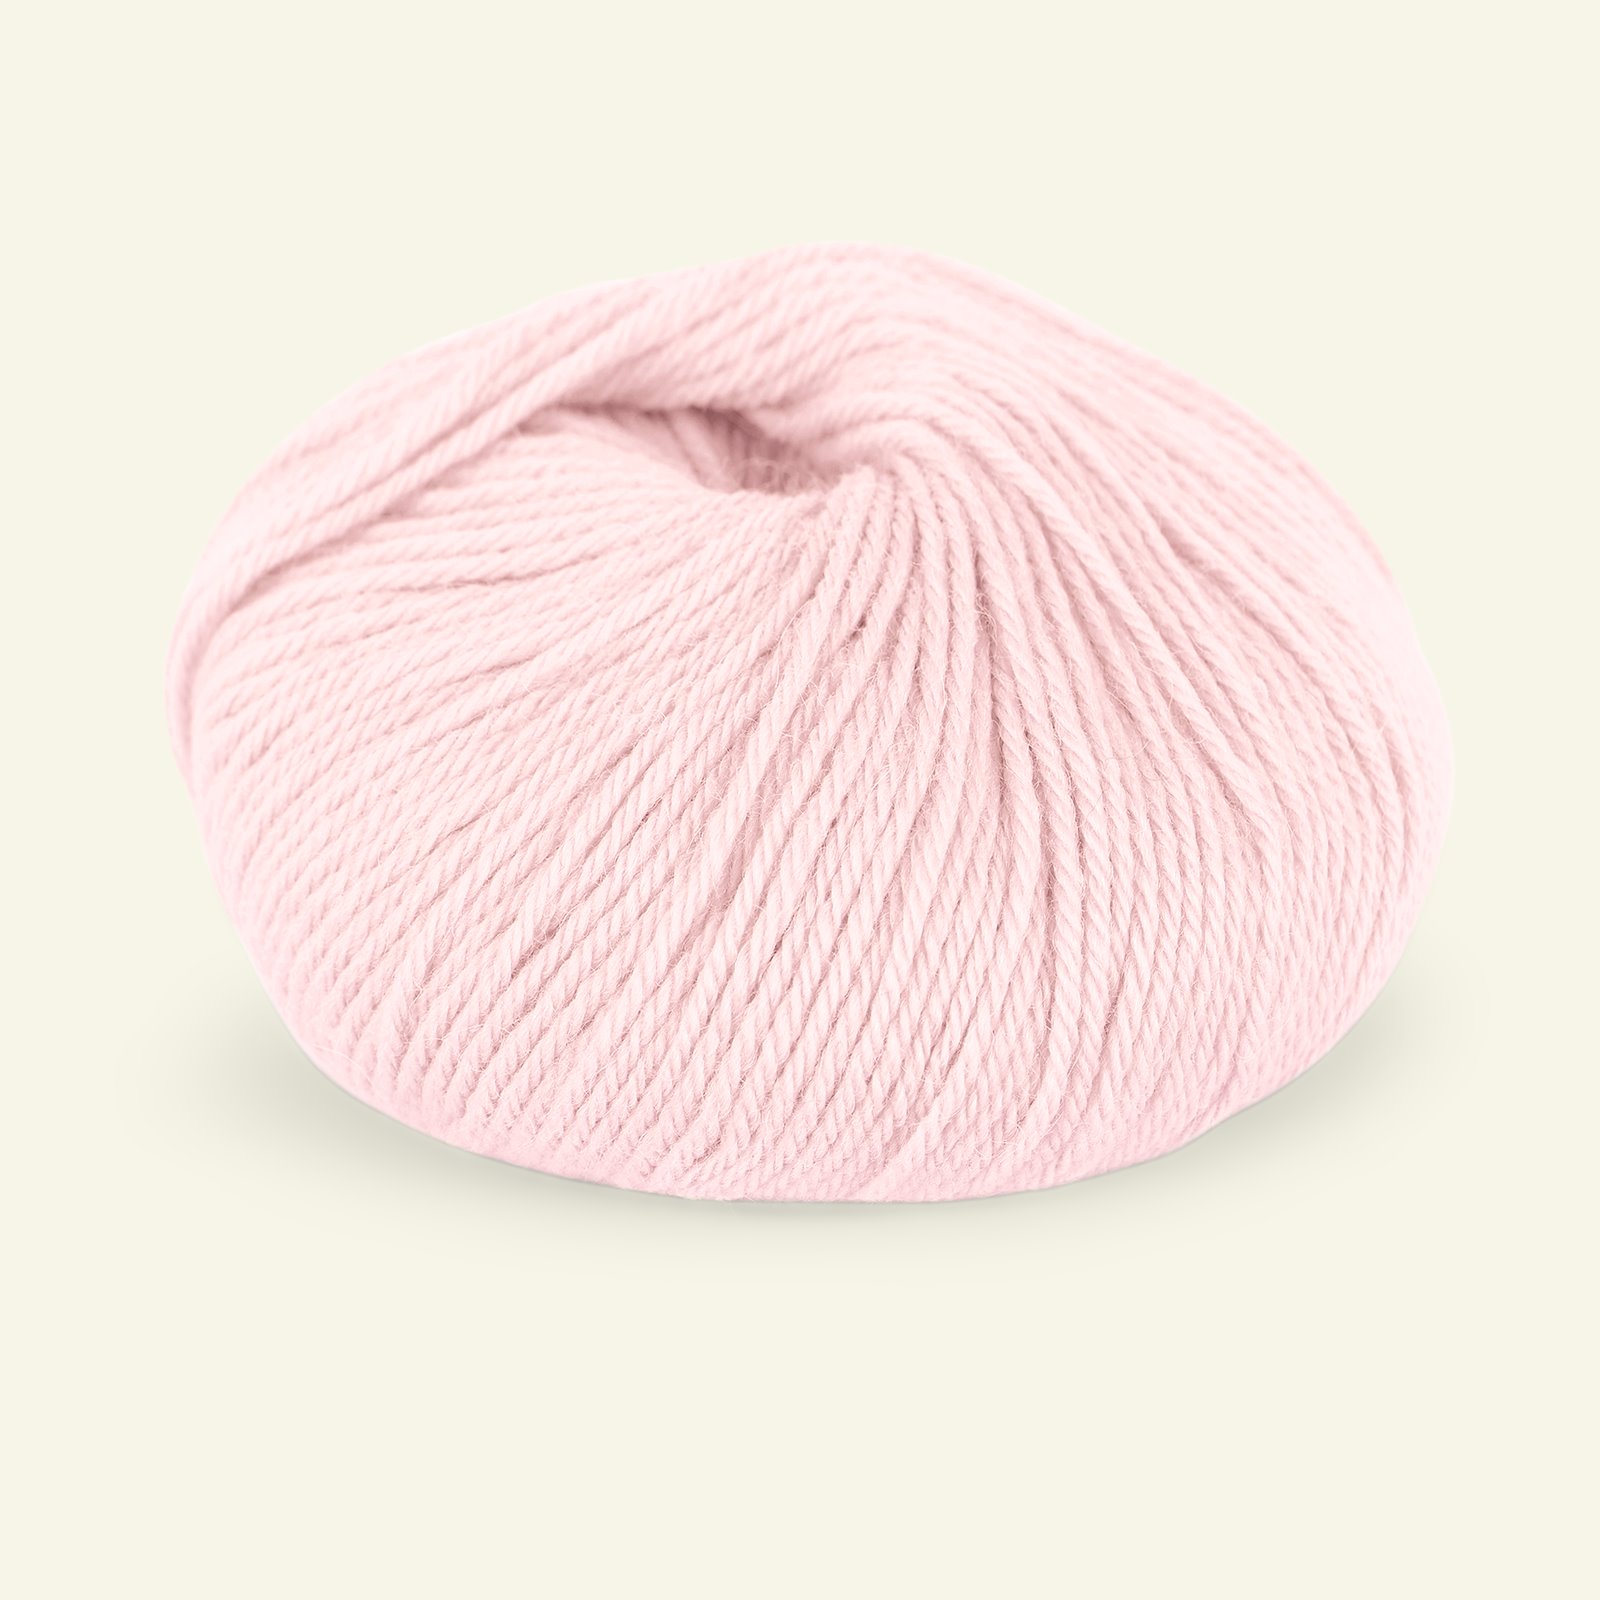 Du Store Alpakka, alpaca merino blandingsgarn, "Sterk", lys rosa (910) 90000702_pack_b